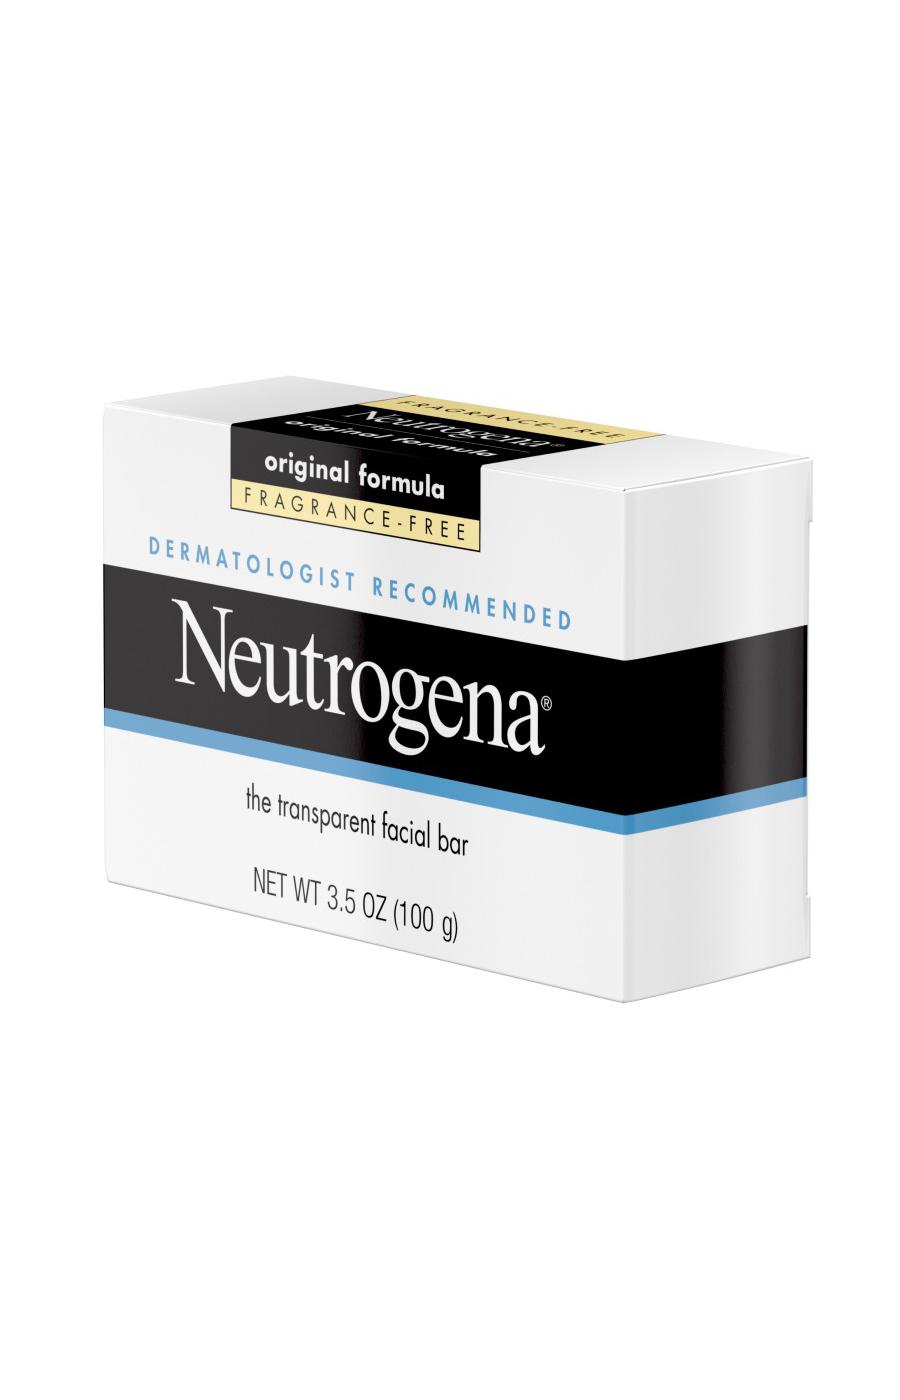 Neutrogena Facial Cleansing Bar - Fragrance Free; image 2 of 4